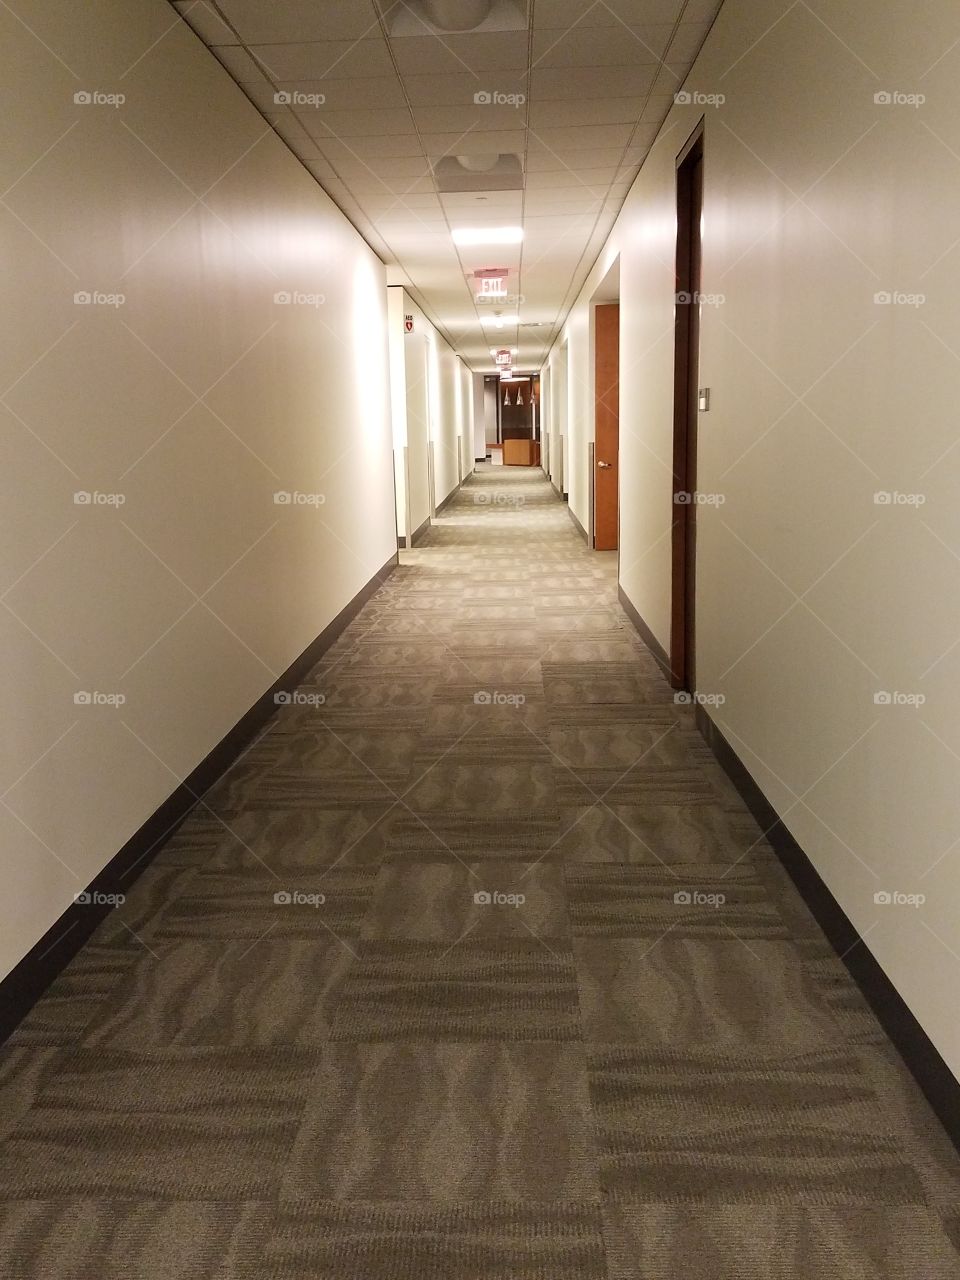 The Never Ending Hallway